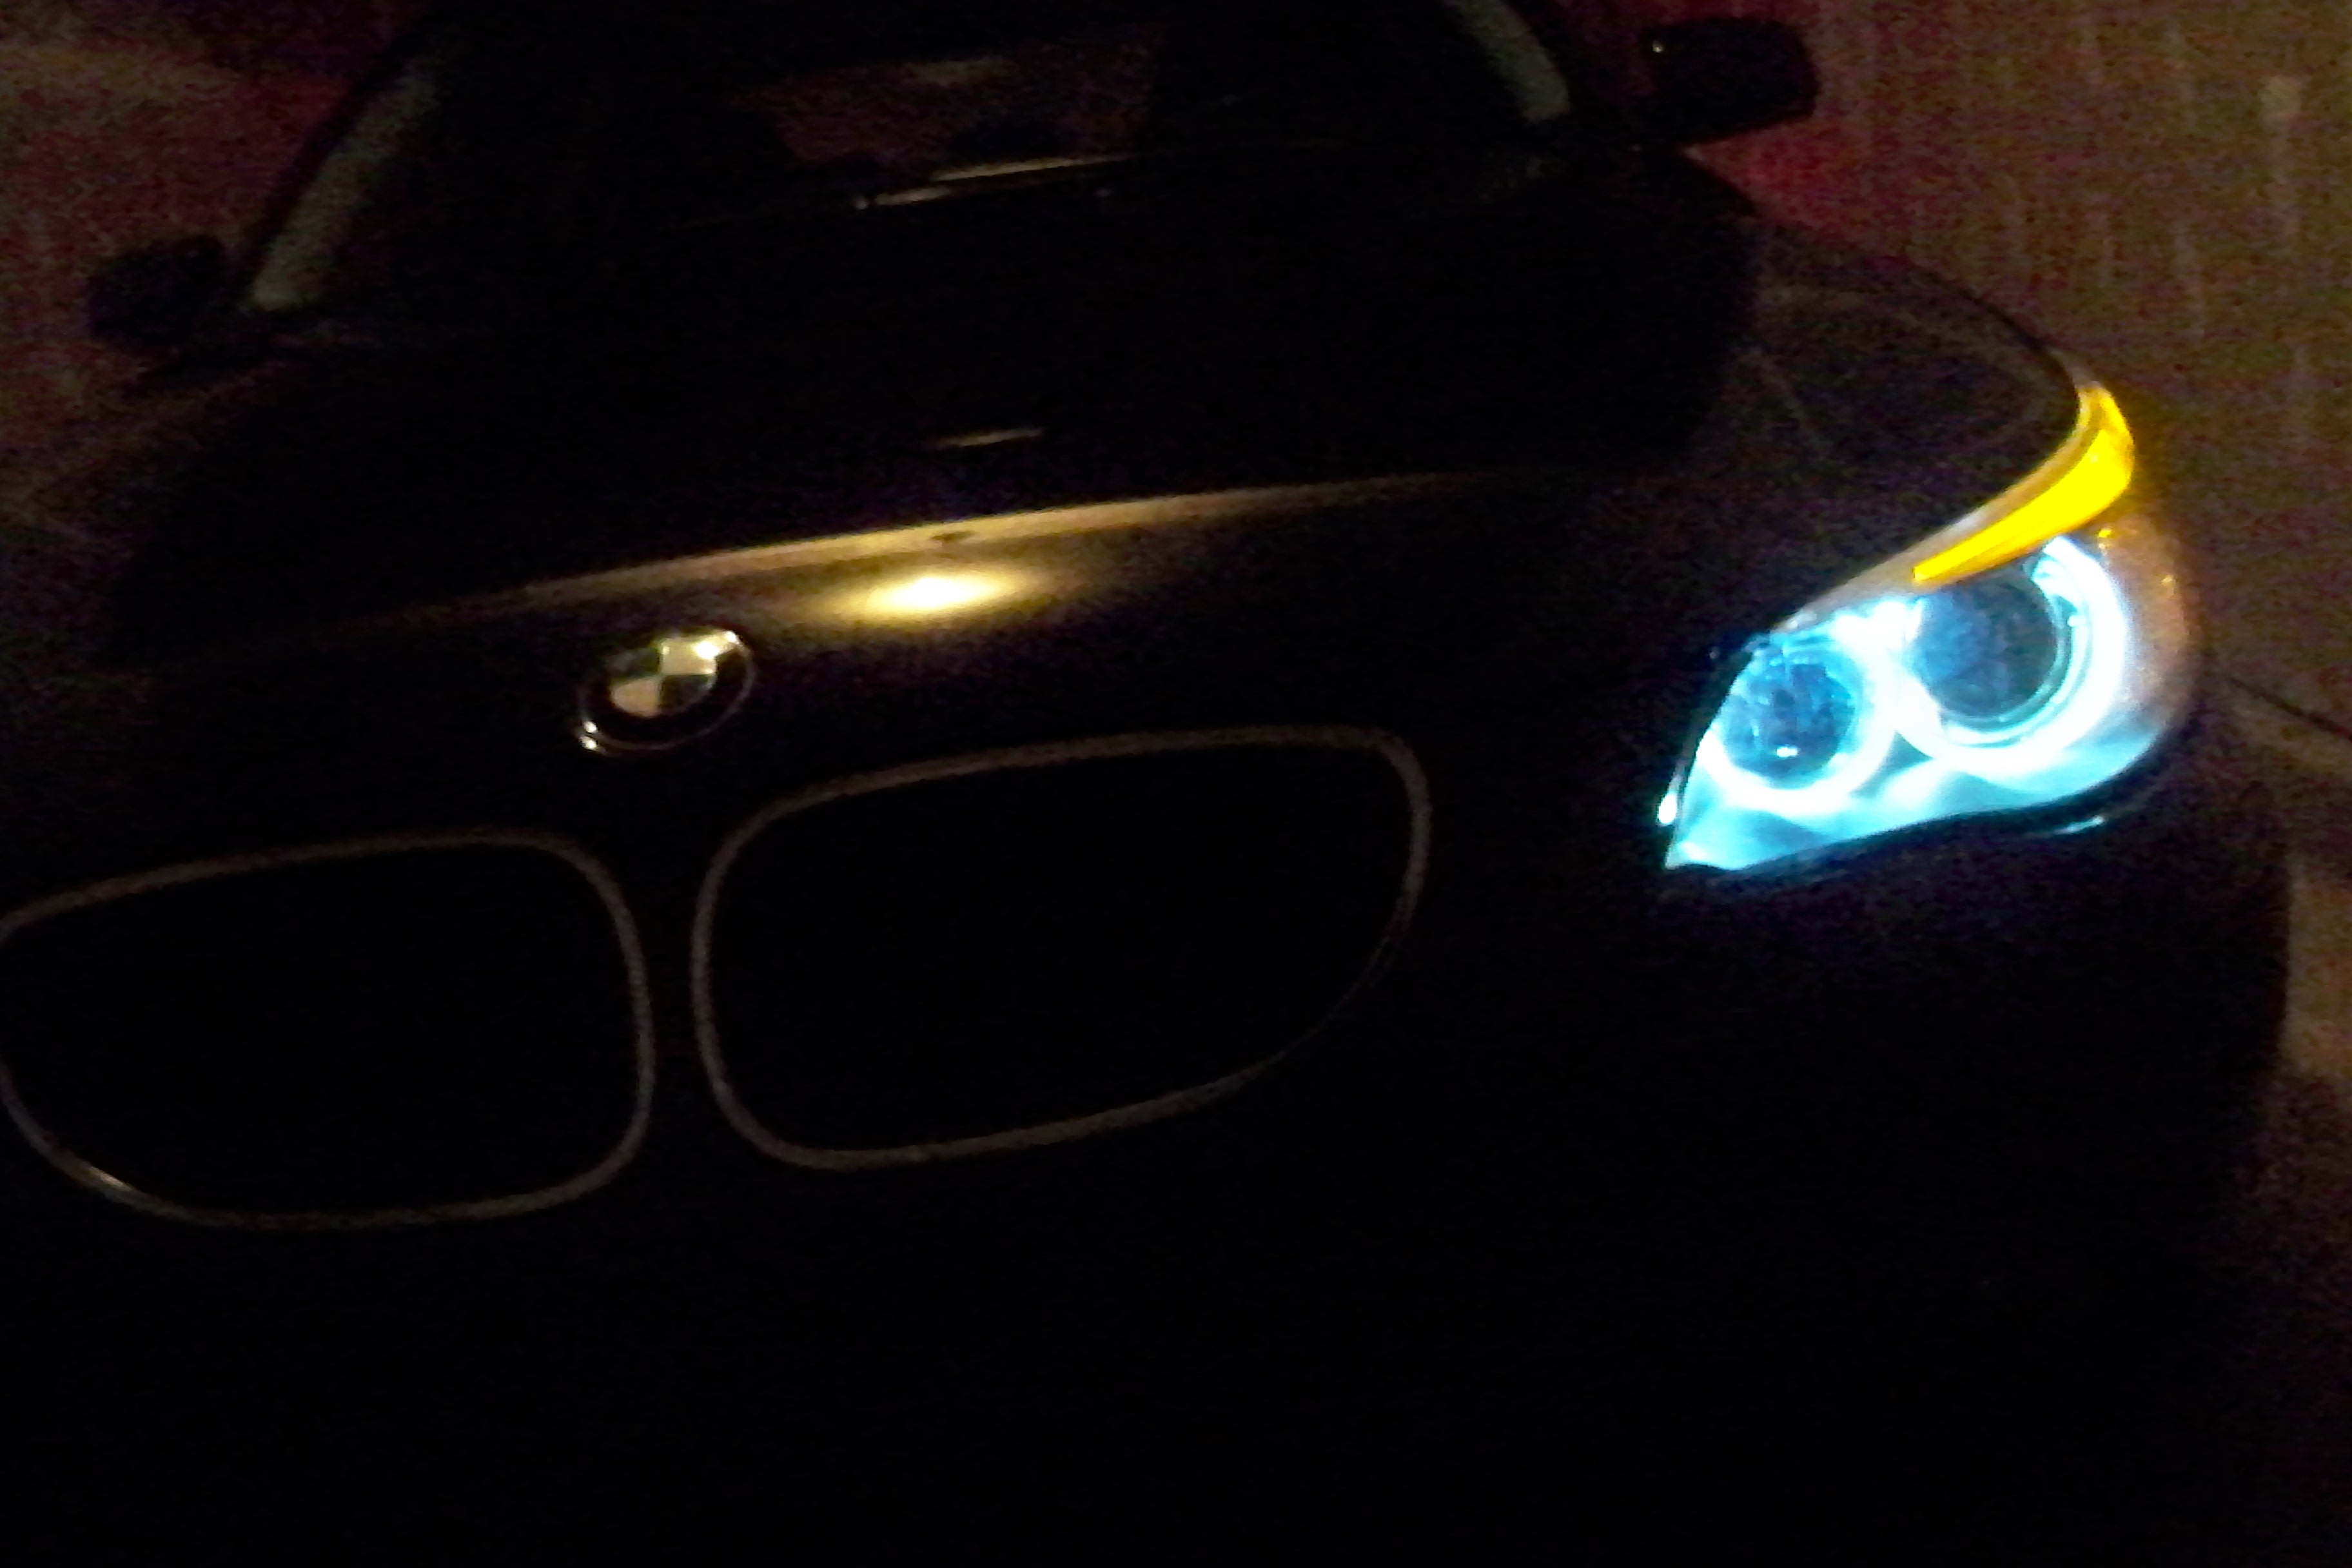 LED angel eyes e60 545i m-sport. - BMW E60 5-Series Forum